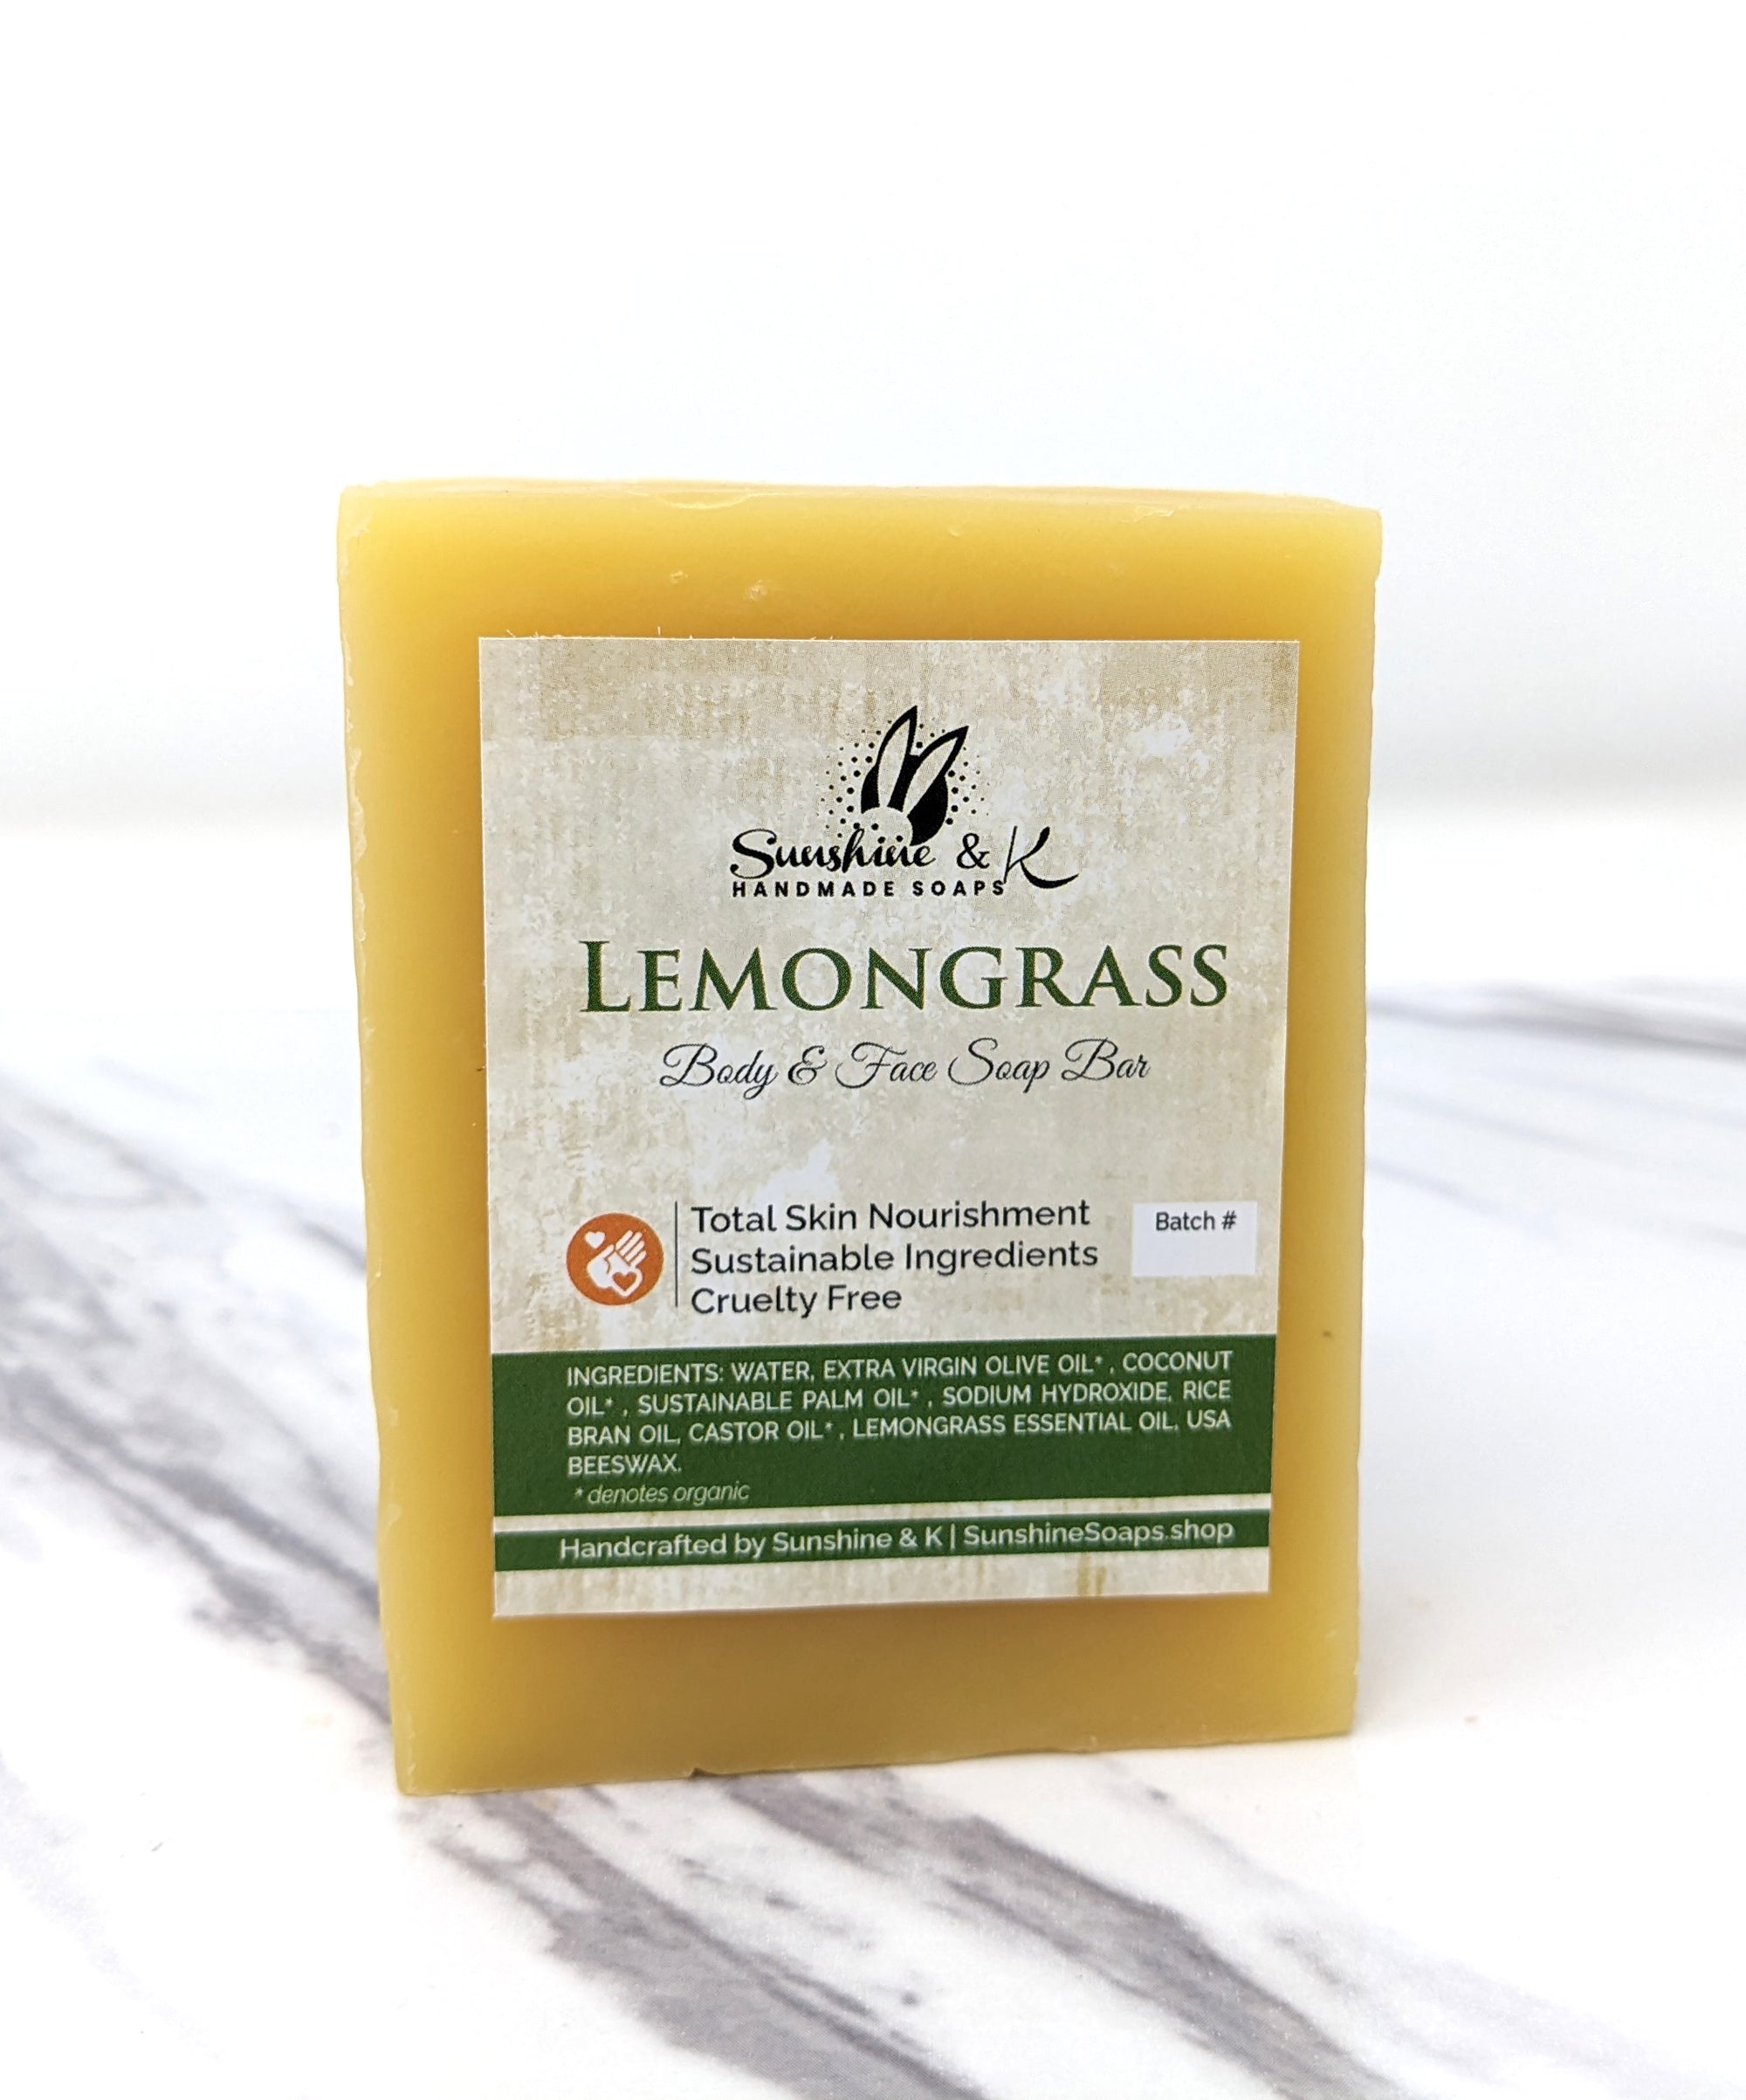 Lemongrass Bar Soap - Body & Face Bar Soap, Handmade Bath Soap, Moisturizing Bar Soap With Beeswax, Rice Bran Oil, & Natural Base Oils, Natural Soap Bars, 5 oz, Sunshine & K Handmade Soaps